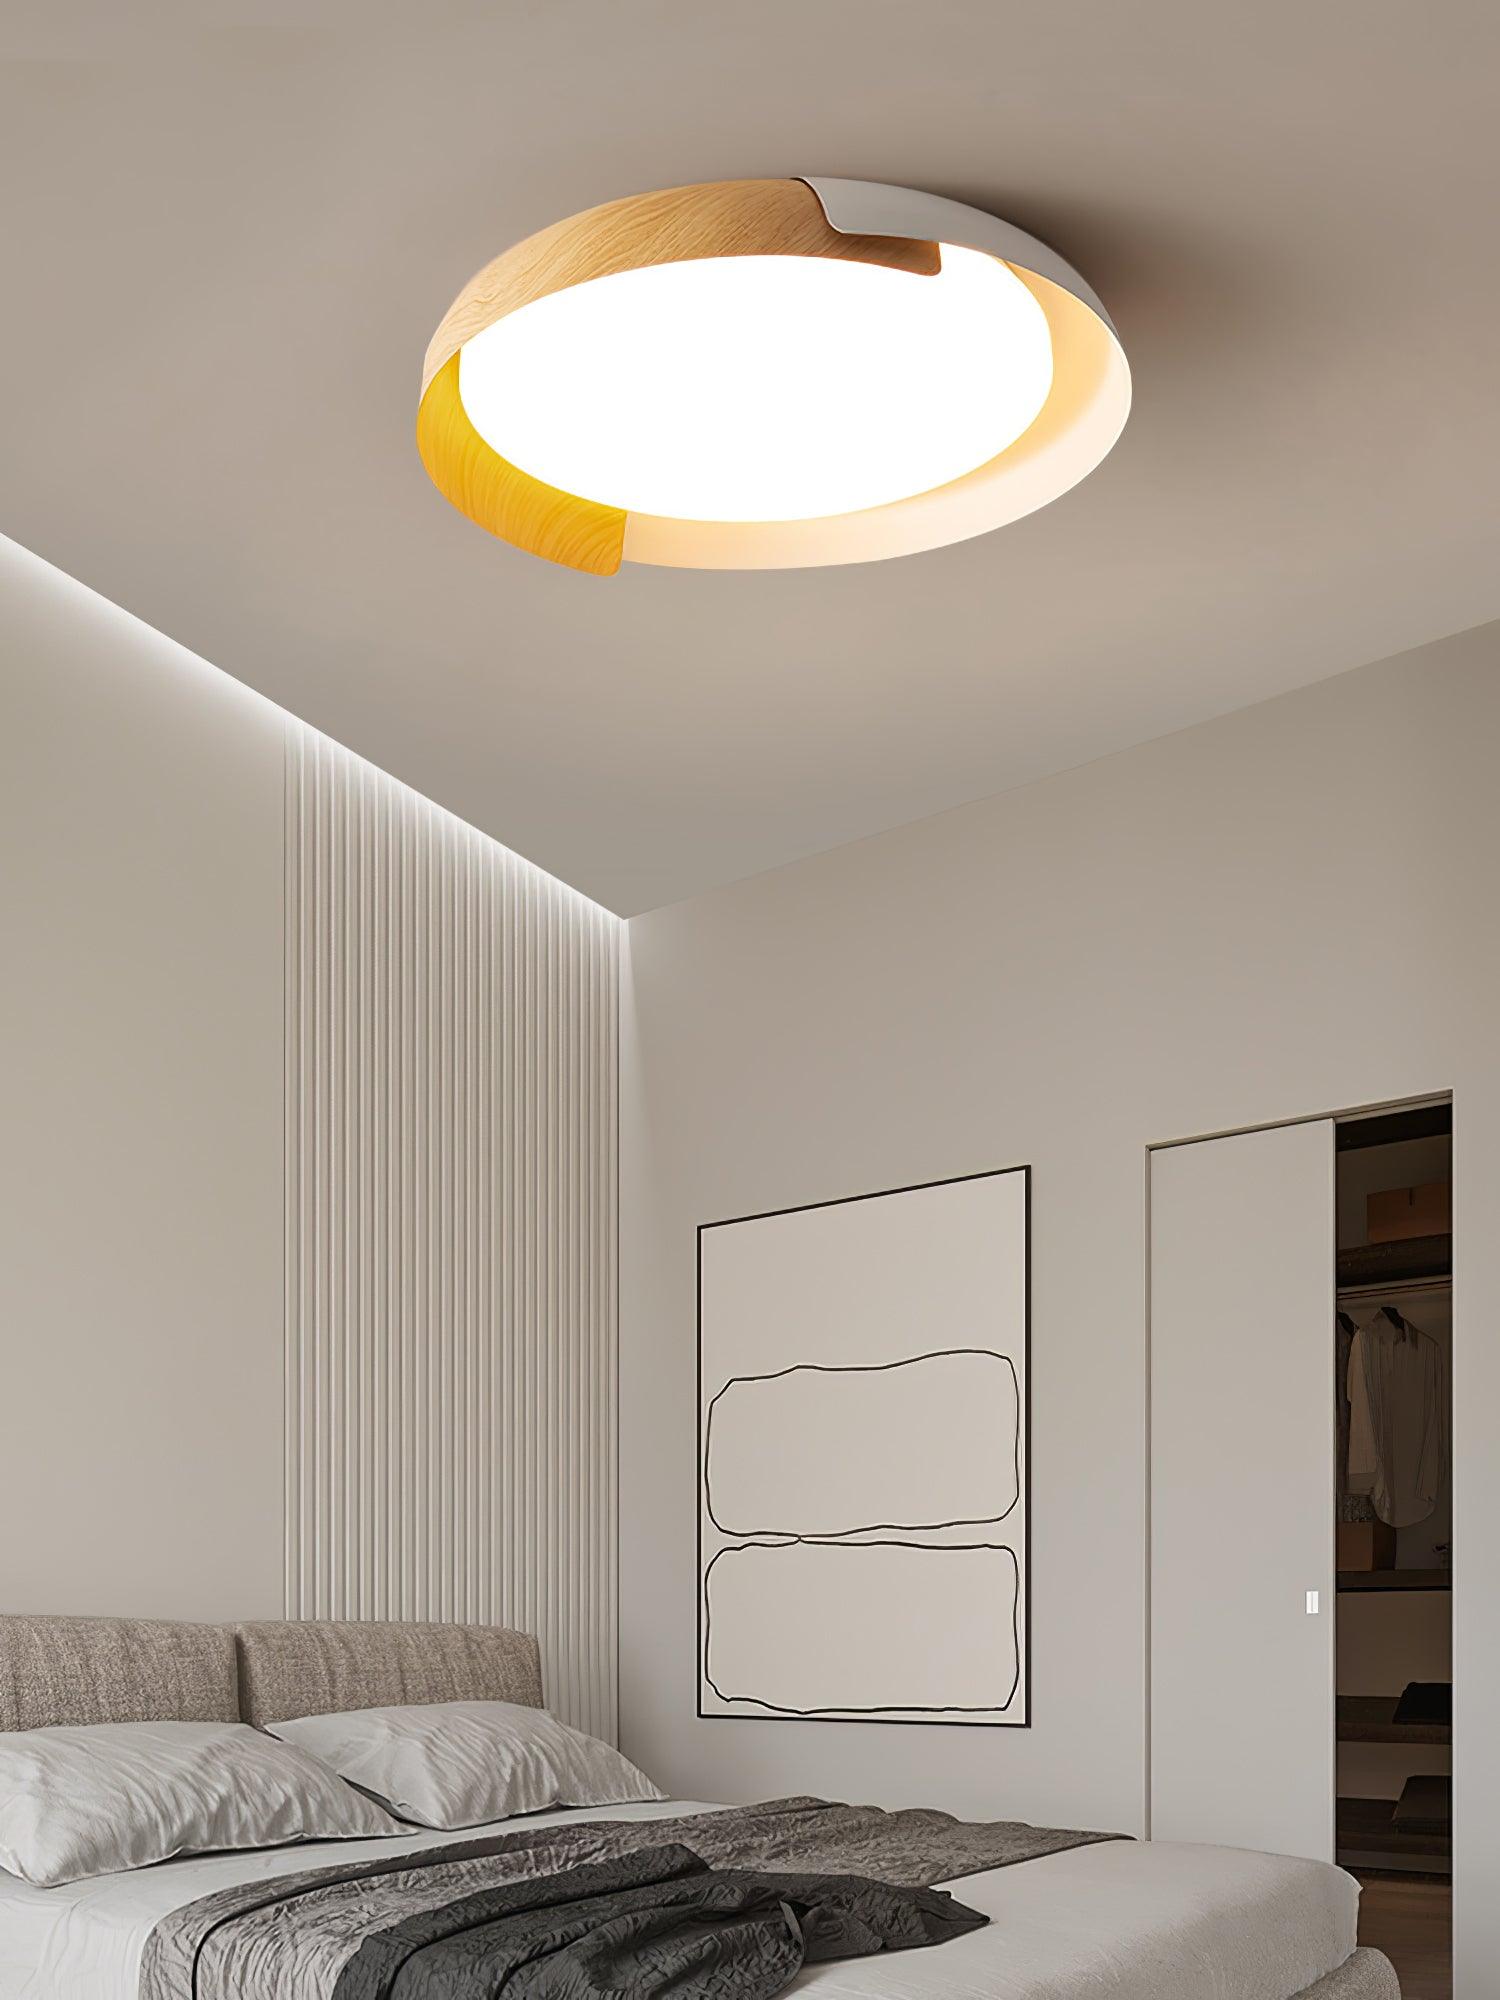 ViKaey Modern LED Ceiling Light, Minimalist Wood Style Flush Mount Ceiling  Light Fixture, Circle Lighting Lamp withLampshade (White, 15.8'')